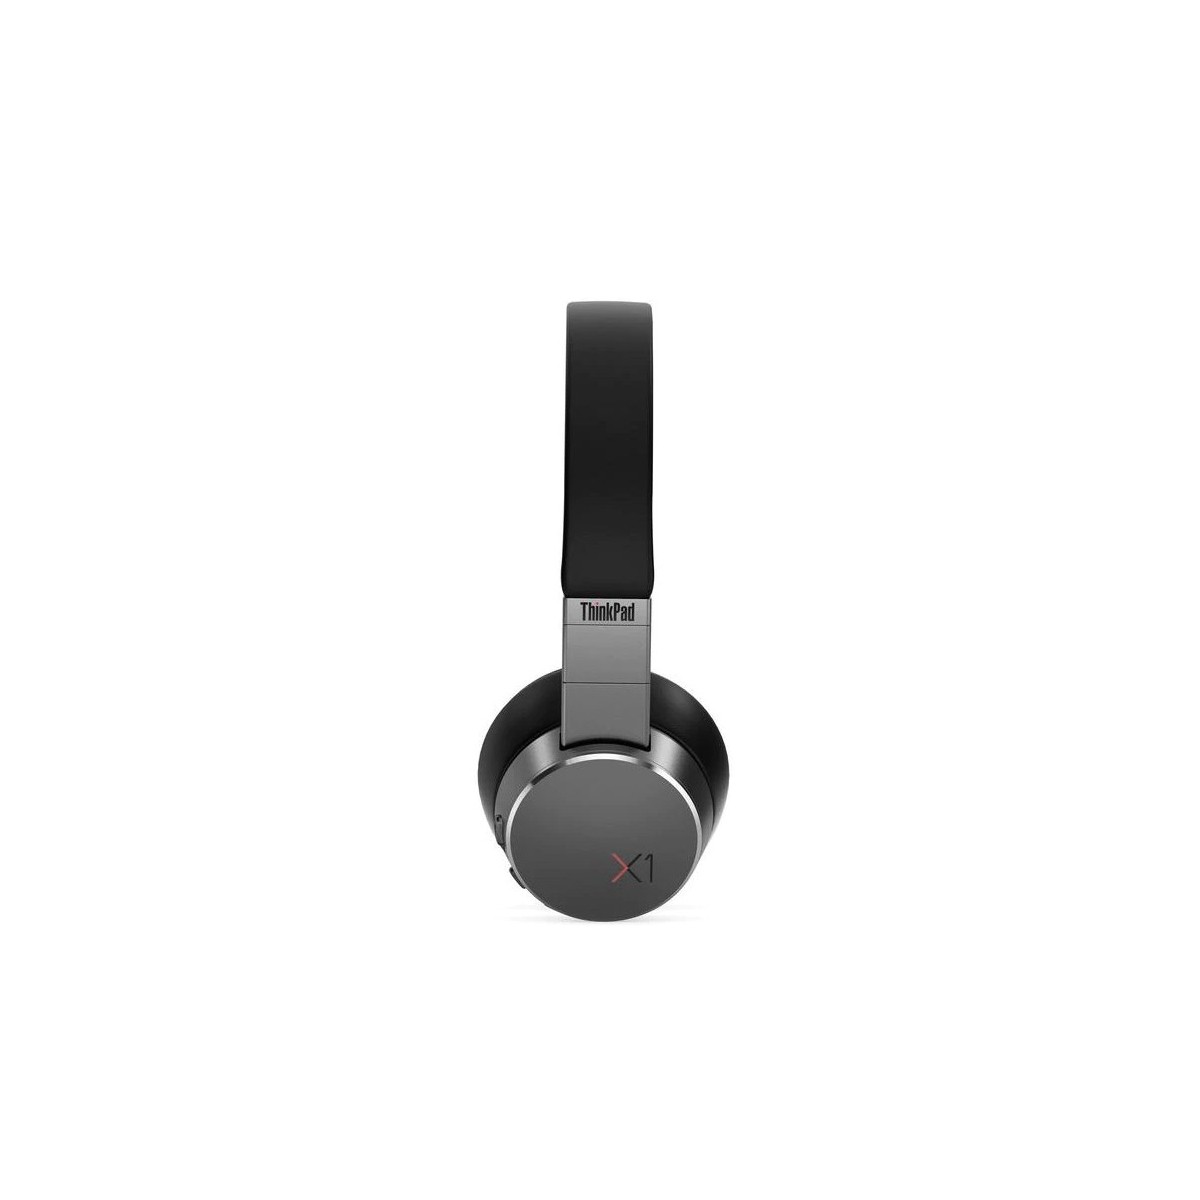 Lenovo ThinkPad X1 - Headphones - Head-band - Calls  Music - Black - Grey - Silver - Binaural - In-line control unit